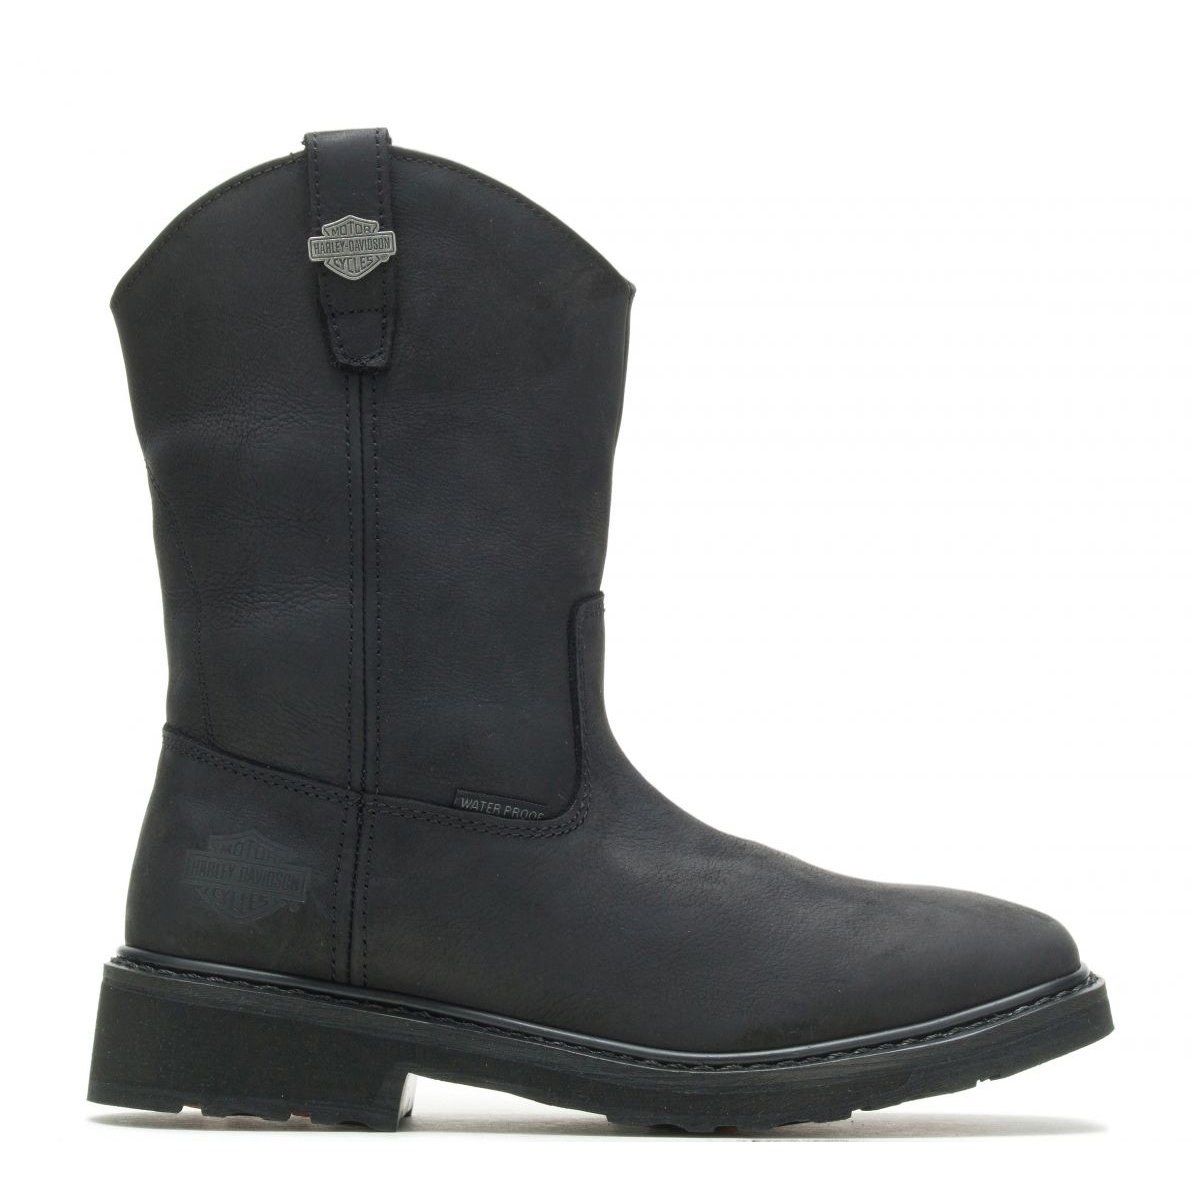 HARLEY-DAVIDSON WORK Men's Altman Western Classic Soft Toe Work Boot Black - D93561 Black/black - Black/black, 10